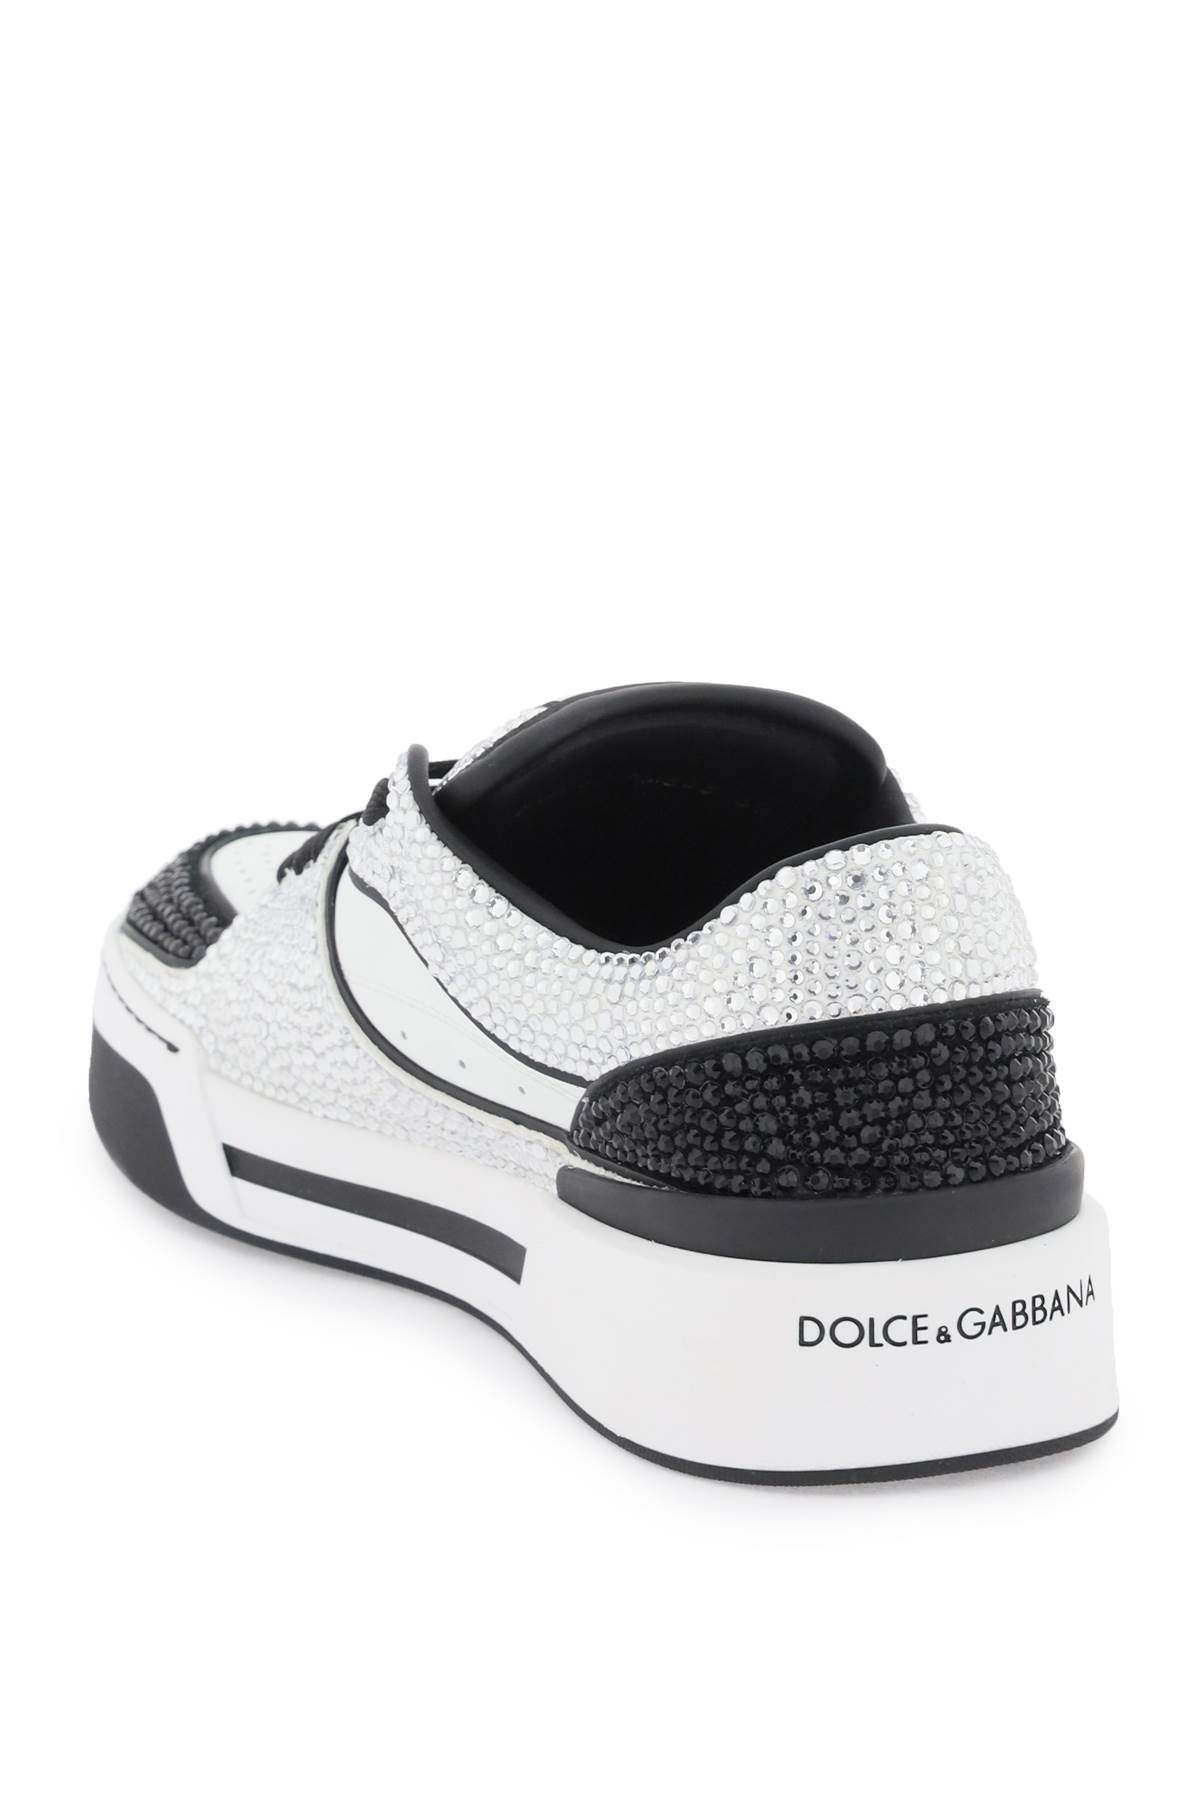 Dolce & Gabbana Dolce & gabbana 'new roma' sneakers with rhinestones